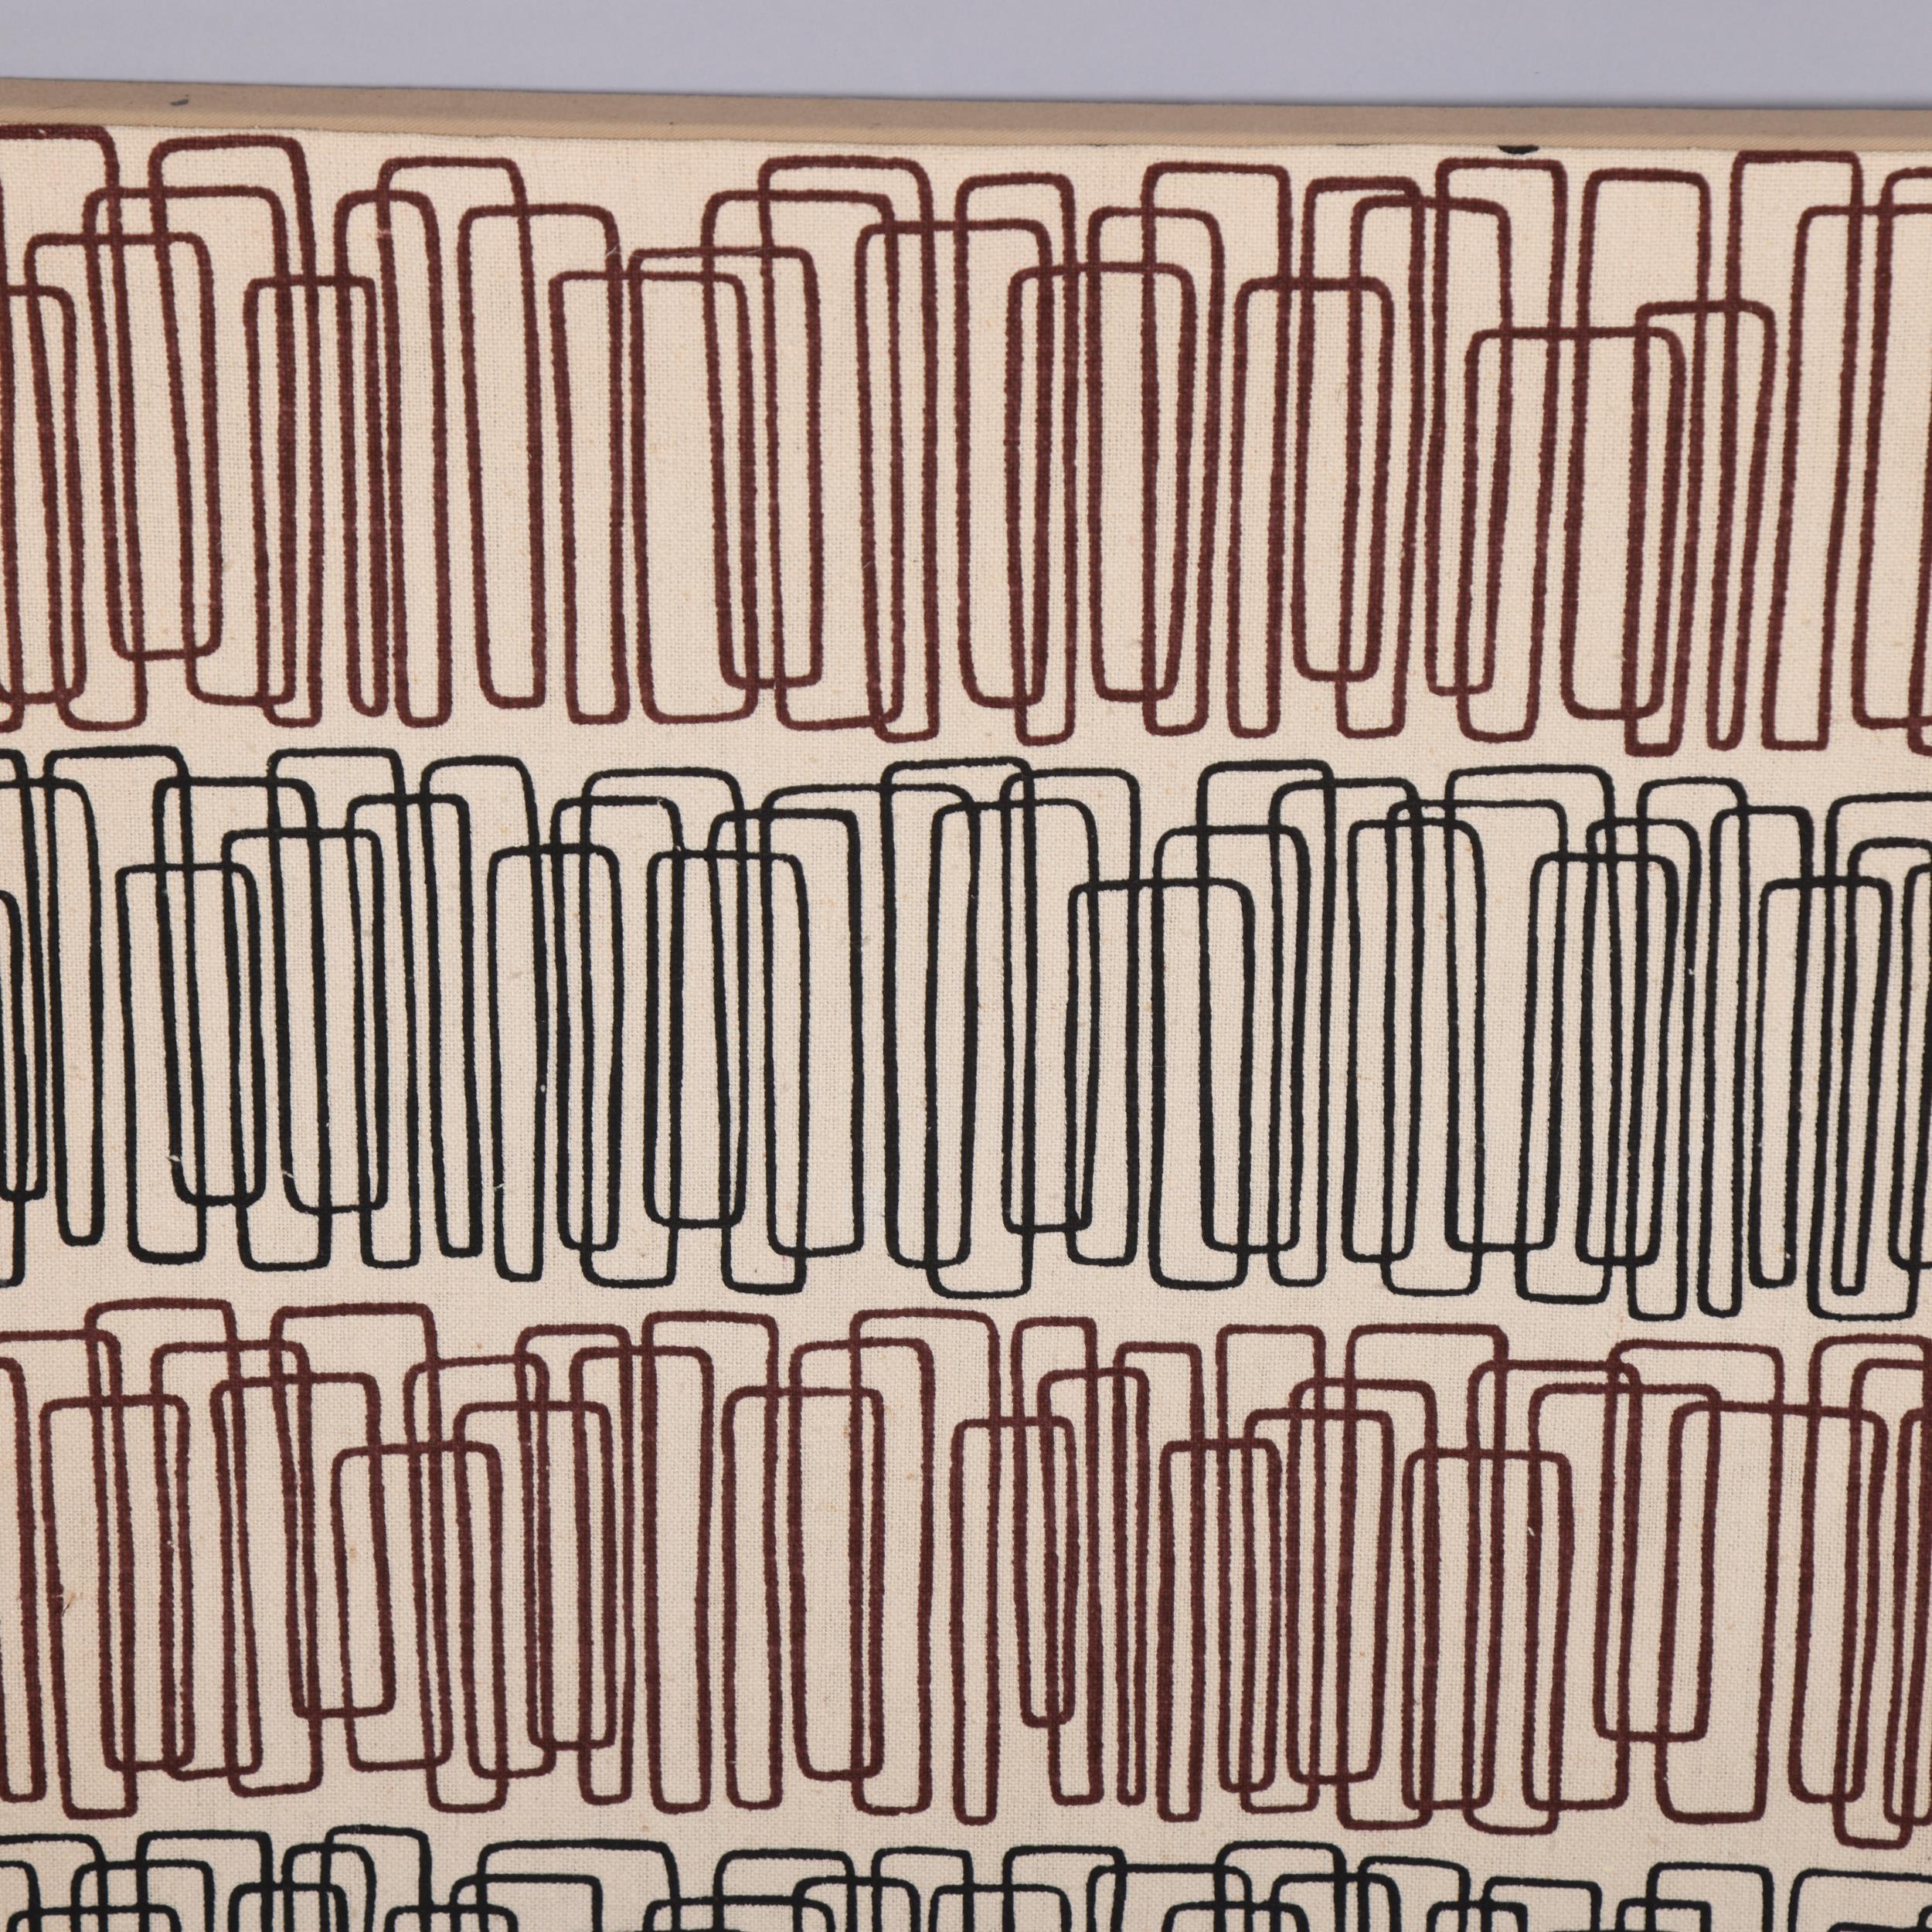 A 1940s' /50s' ANGELO TESTA design fabric panel, Chicago Bauhaus era design "Filo", professionally - Image 2 of 3